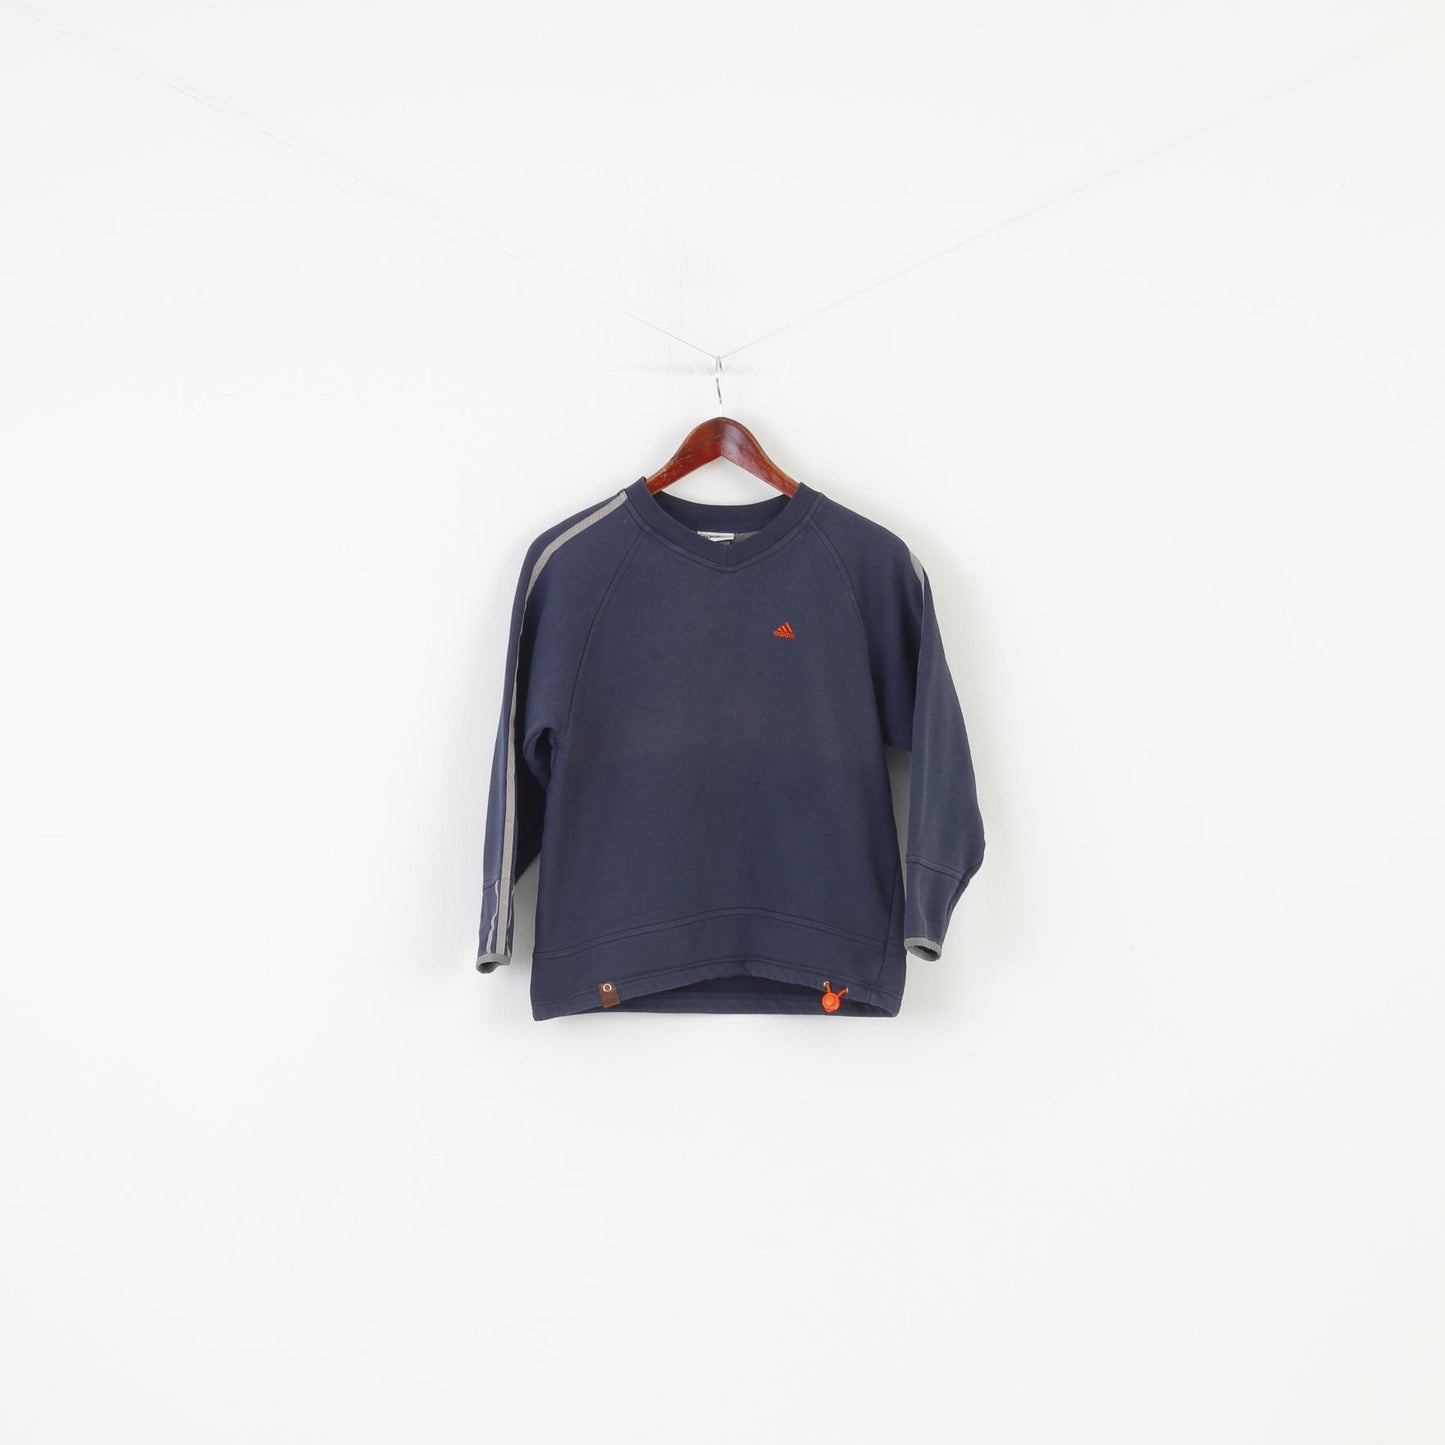 Adidas Boys 12Age Sweatshirt Navy Vintage Sport Training Cotton Top